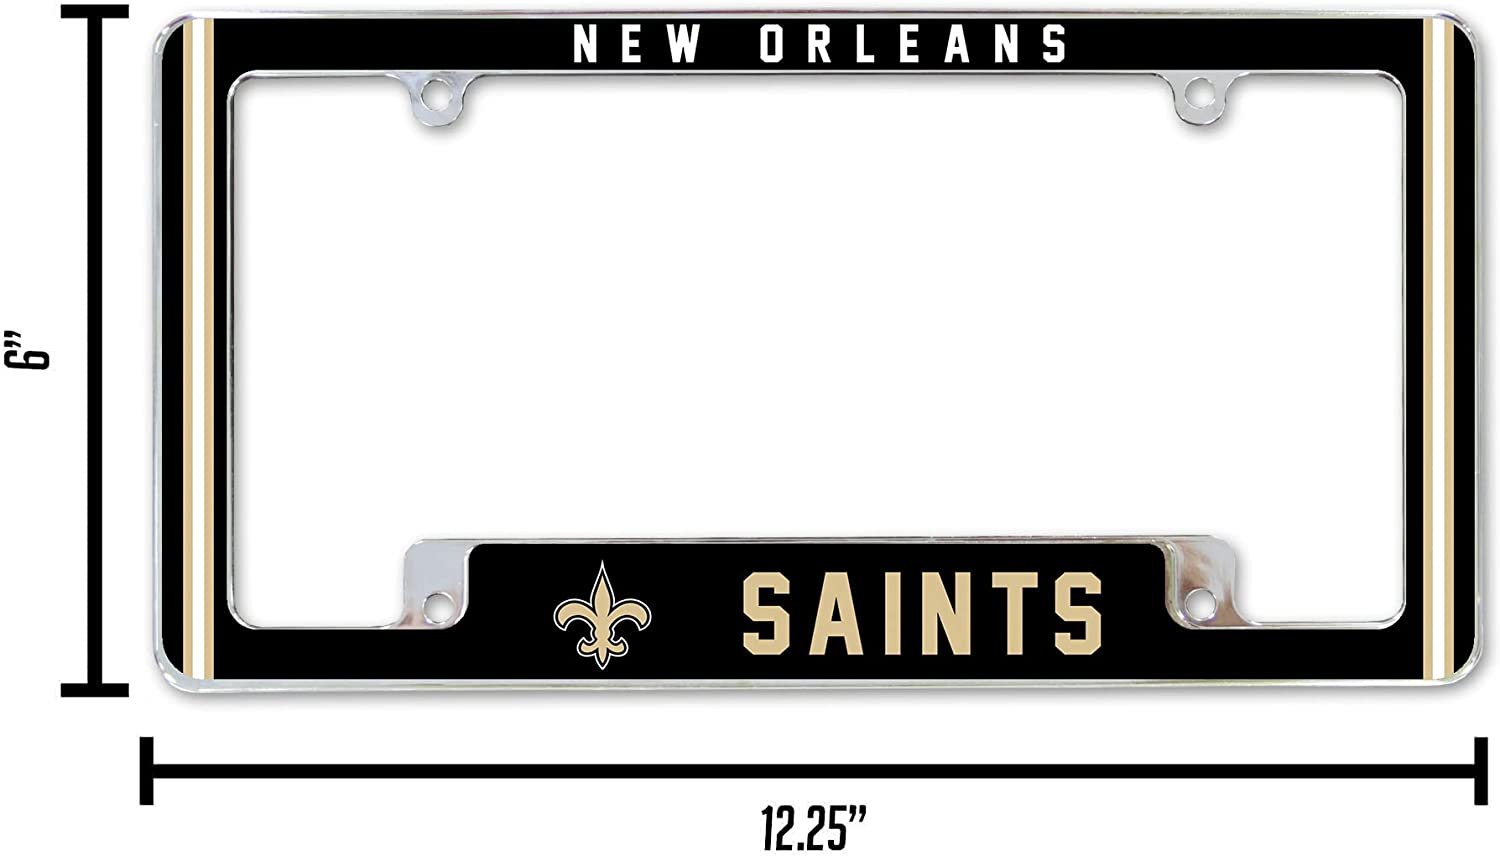 New Orleans Saints Metal License Plate Frame Chrome Tag Cover Alternate Design 6x12 Inch